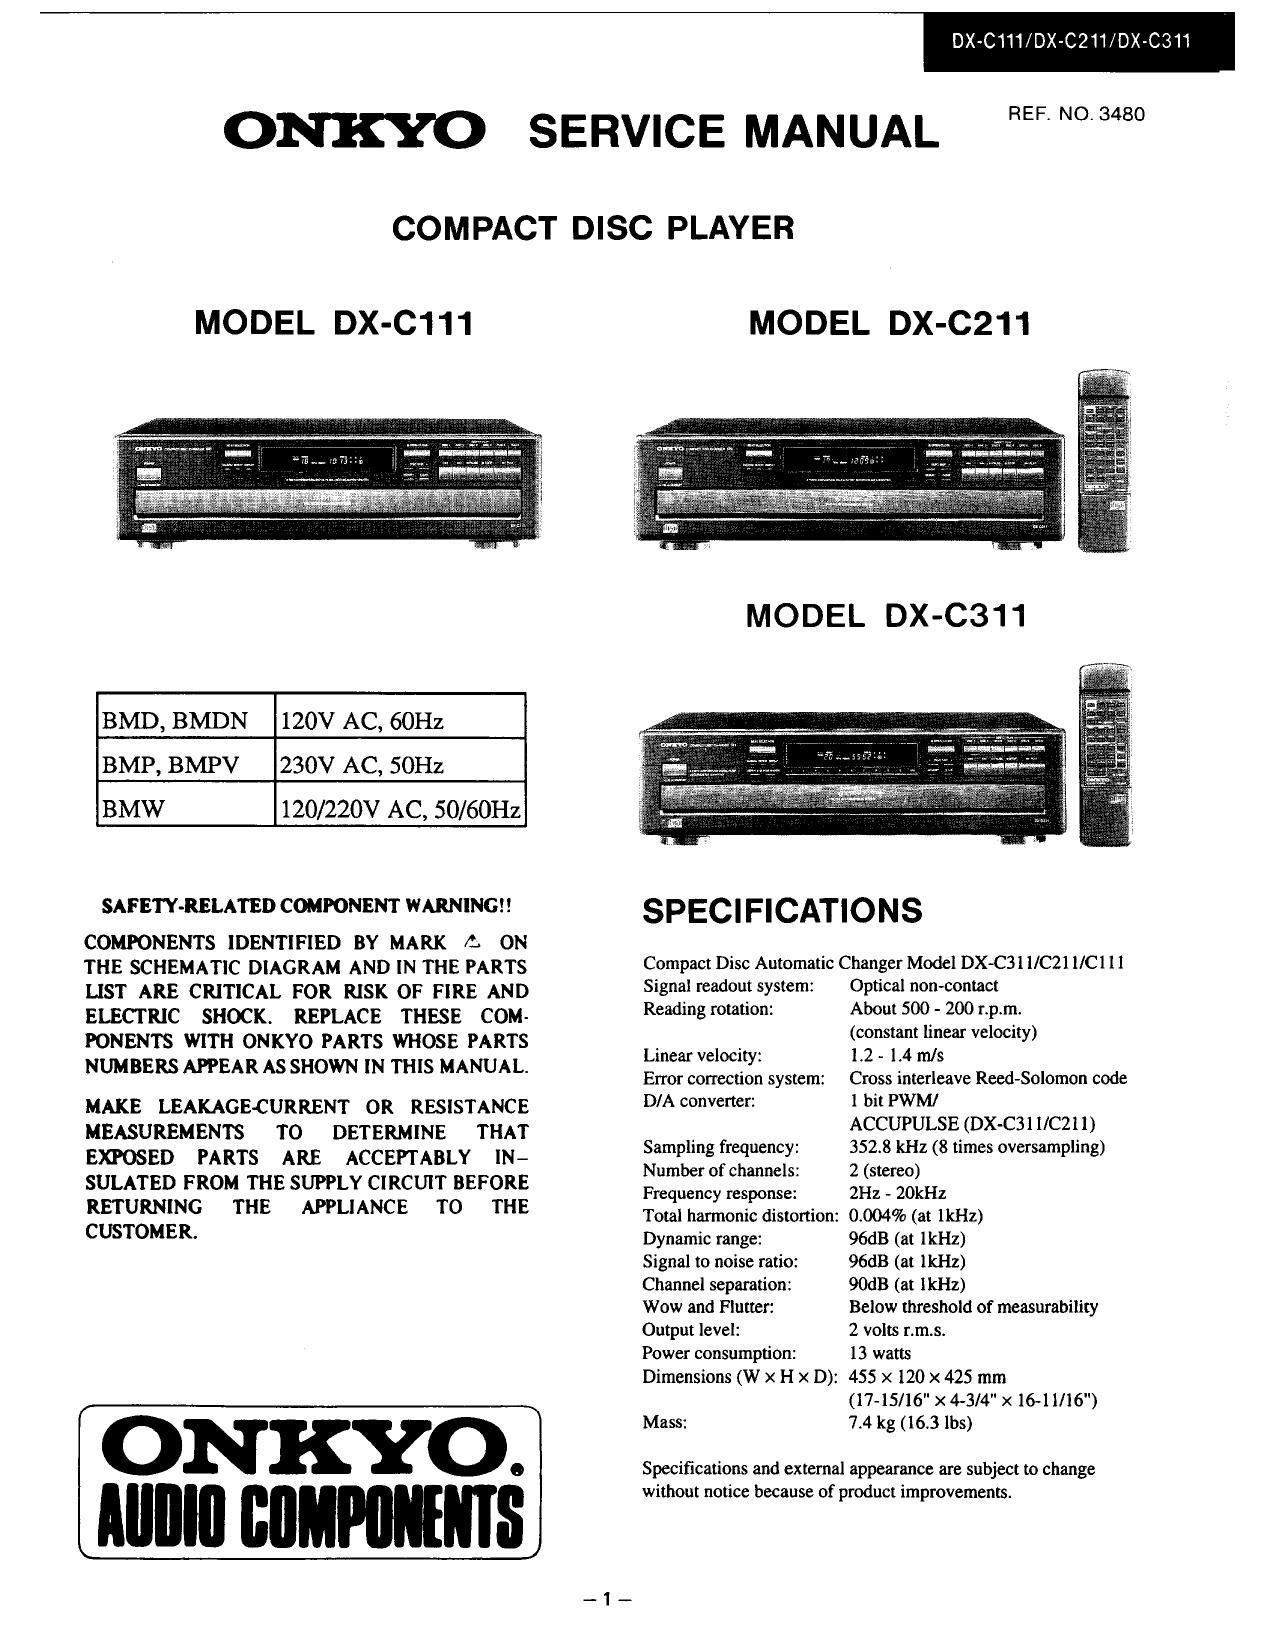 Onkyo DXC 111 Service Manual